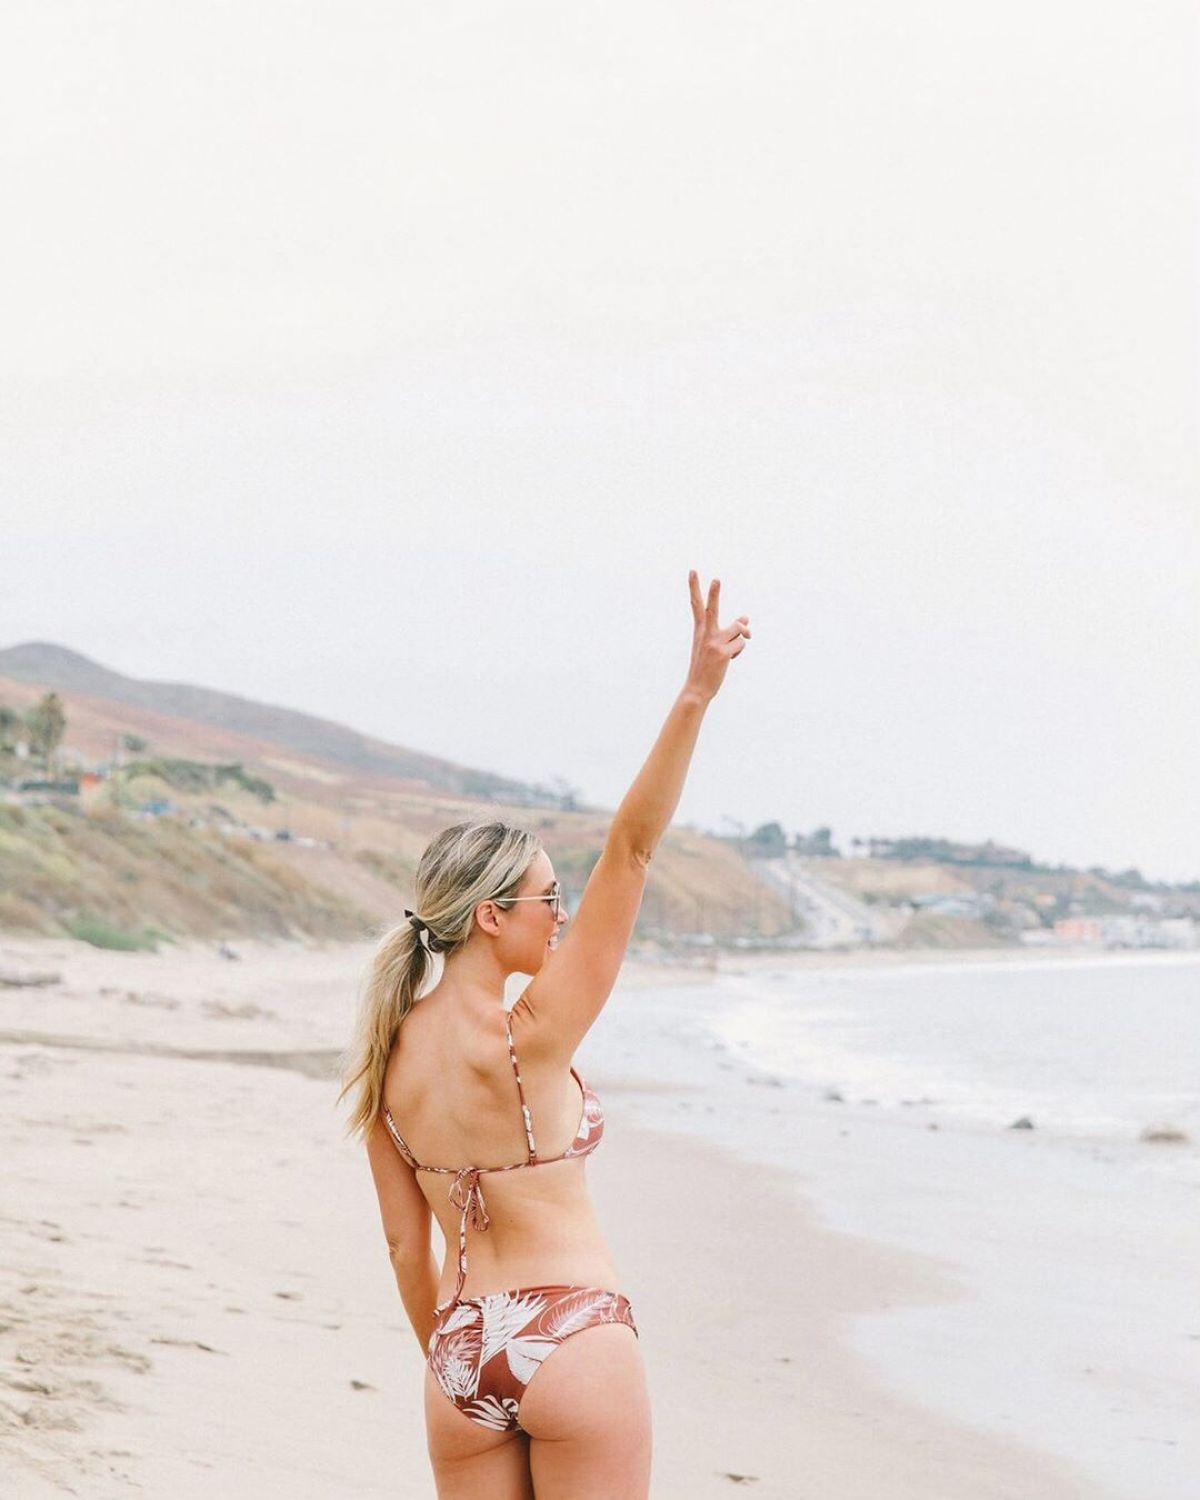 KATRINA BOWDEN in Bikini - Instagram Pictures 06/05/2019. 